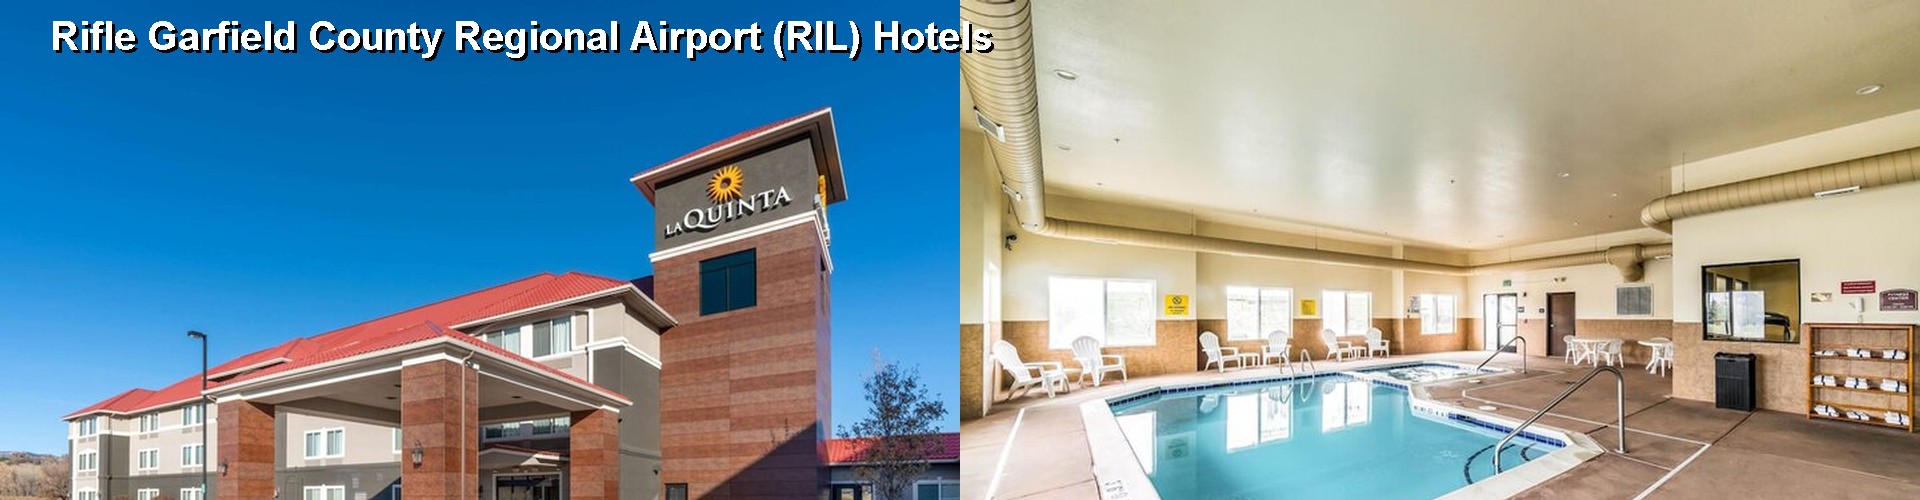 5 Best Hotels near Rifle Garfield County Regional Airport (RIL)